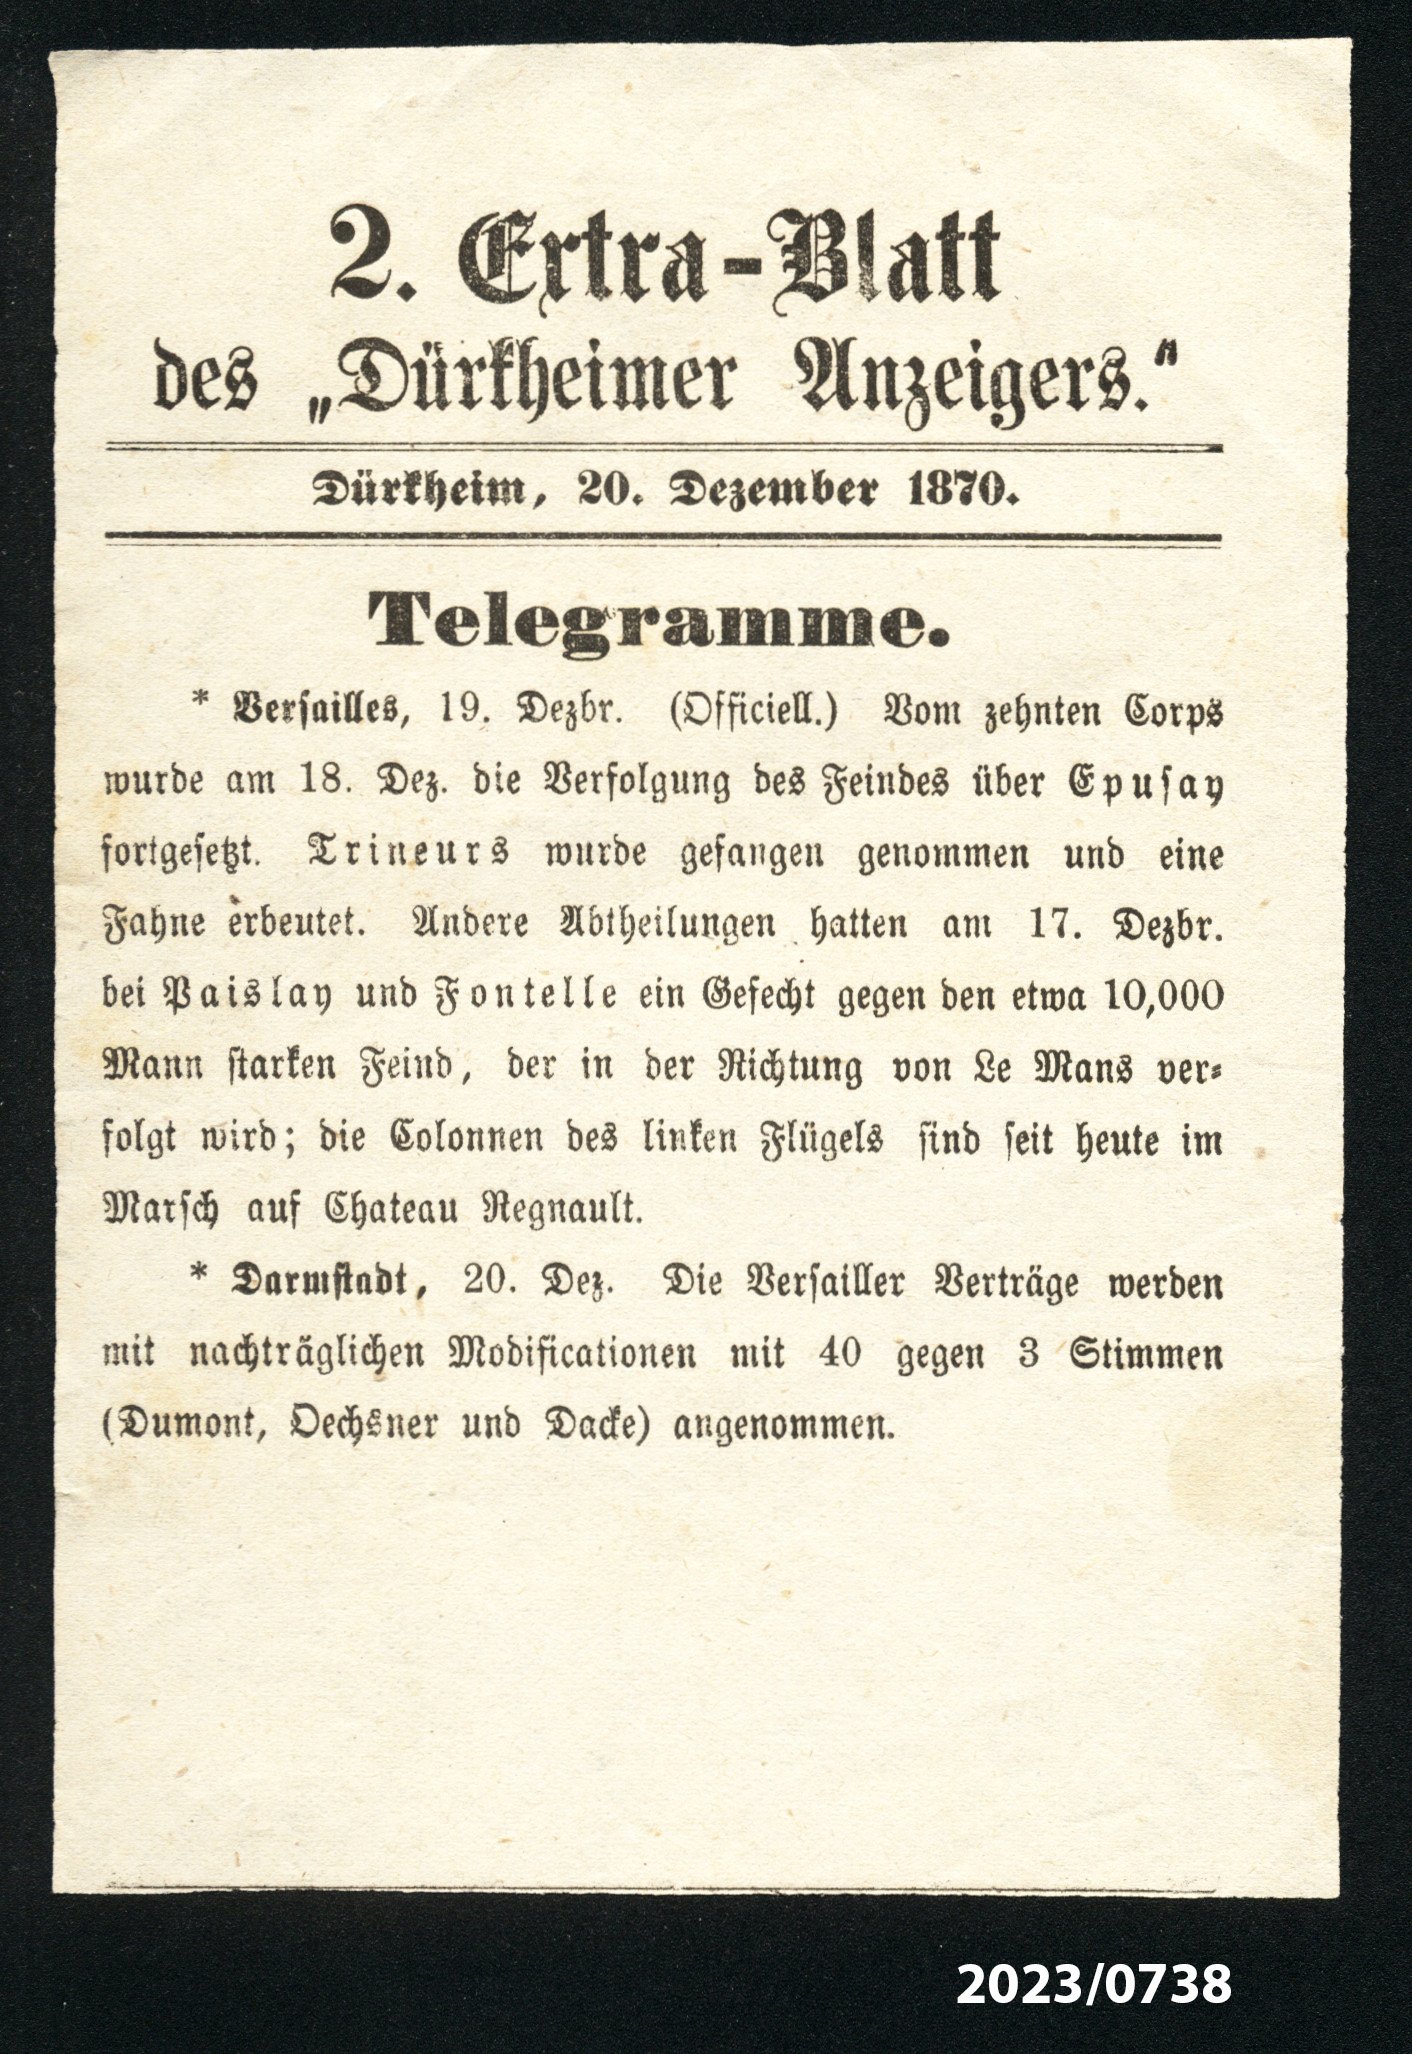 2. Extra-Blatt des "Dürkheimer Anzeigers." 20.12.1870 (Stadtmuseum Bad Dürkheim im Kulturzentrum Haus Catoir CC BY-NC-SA)